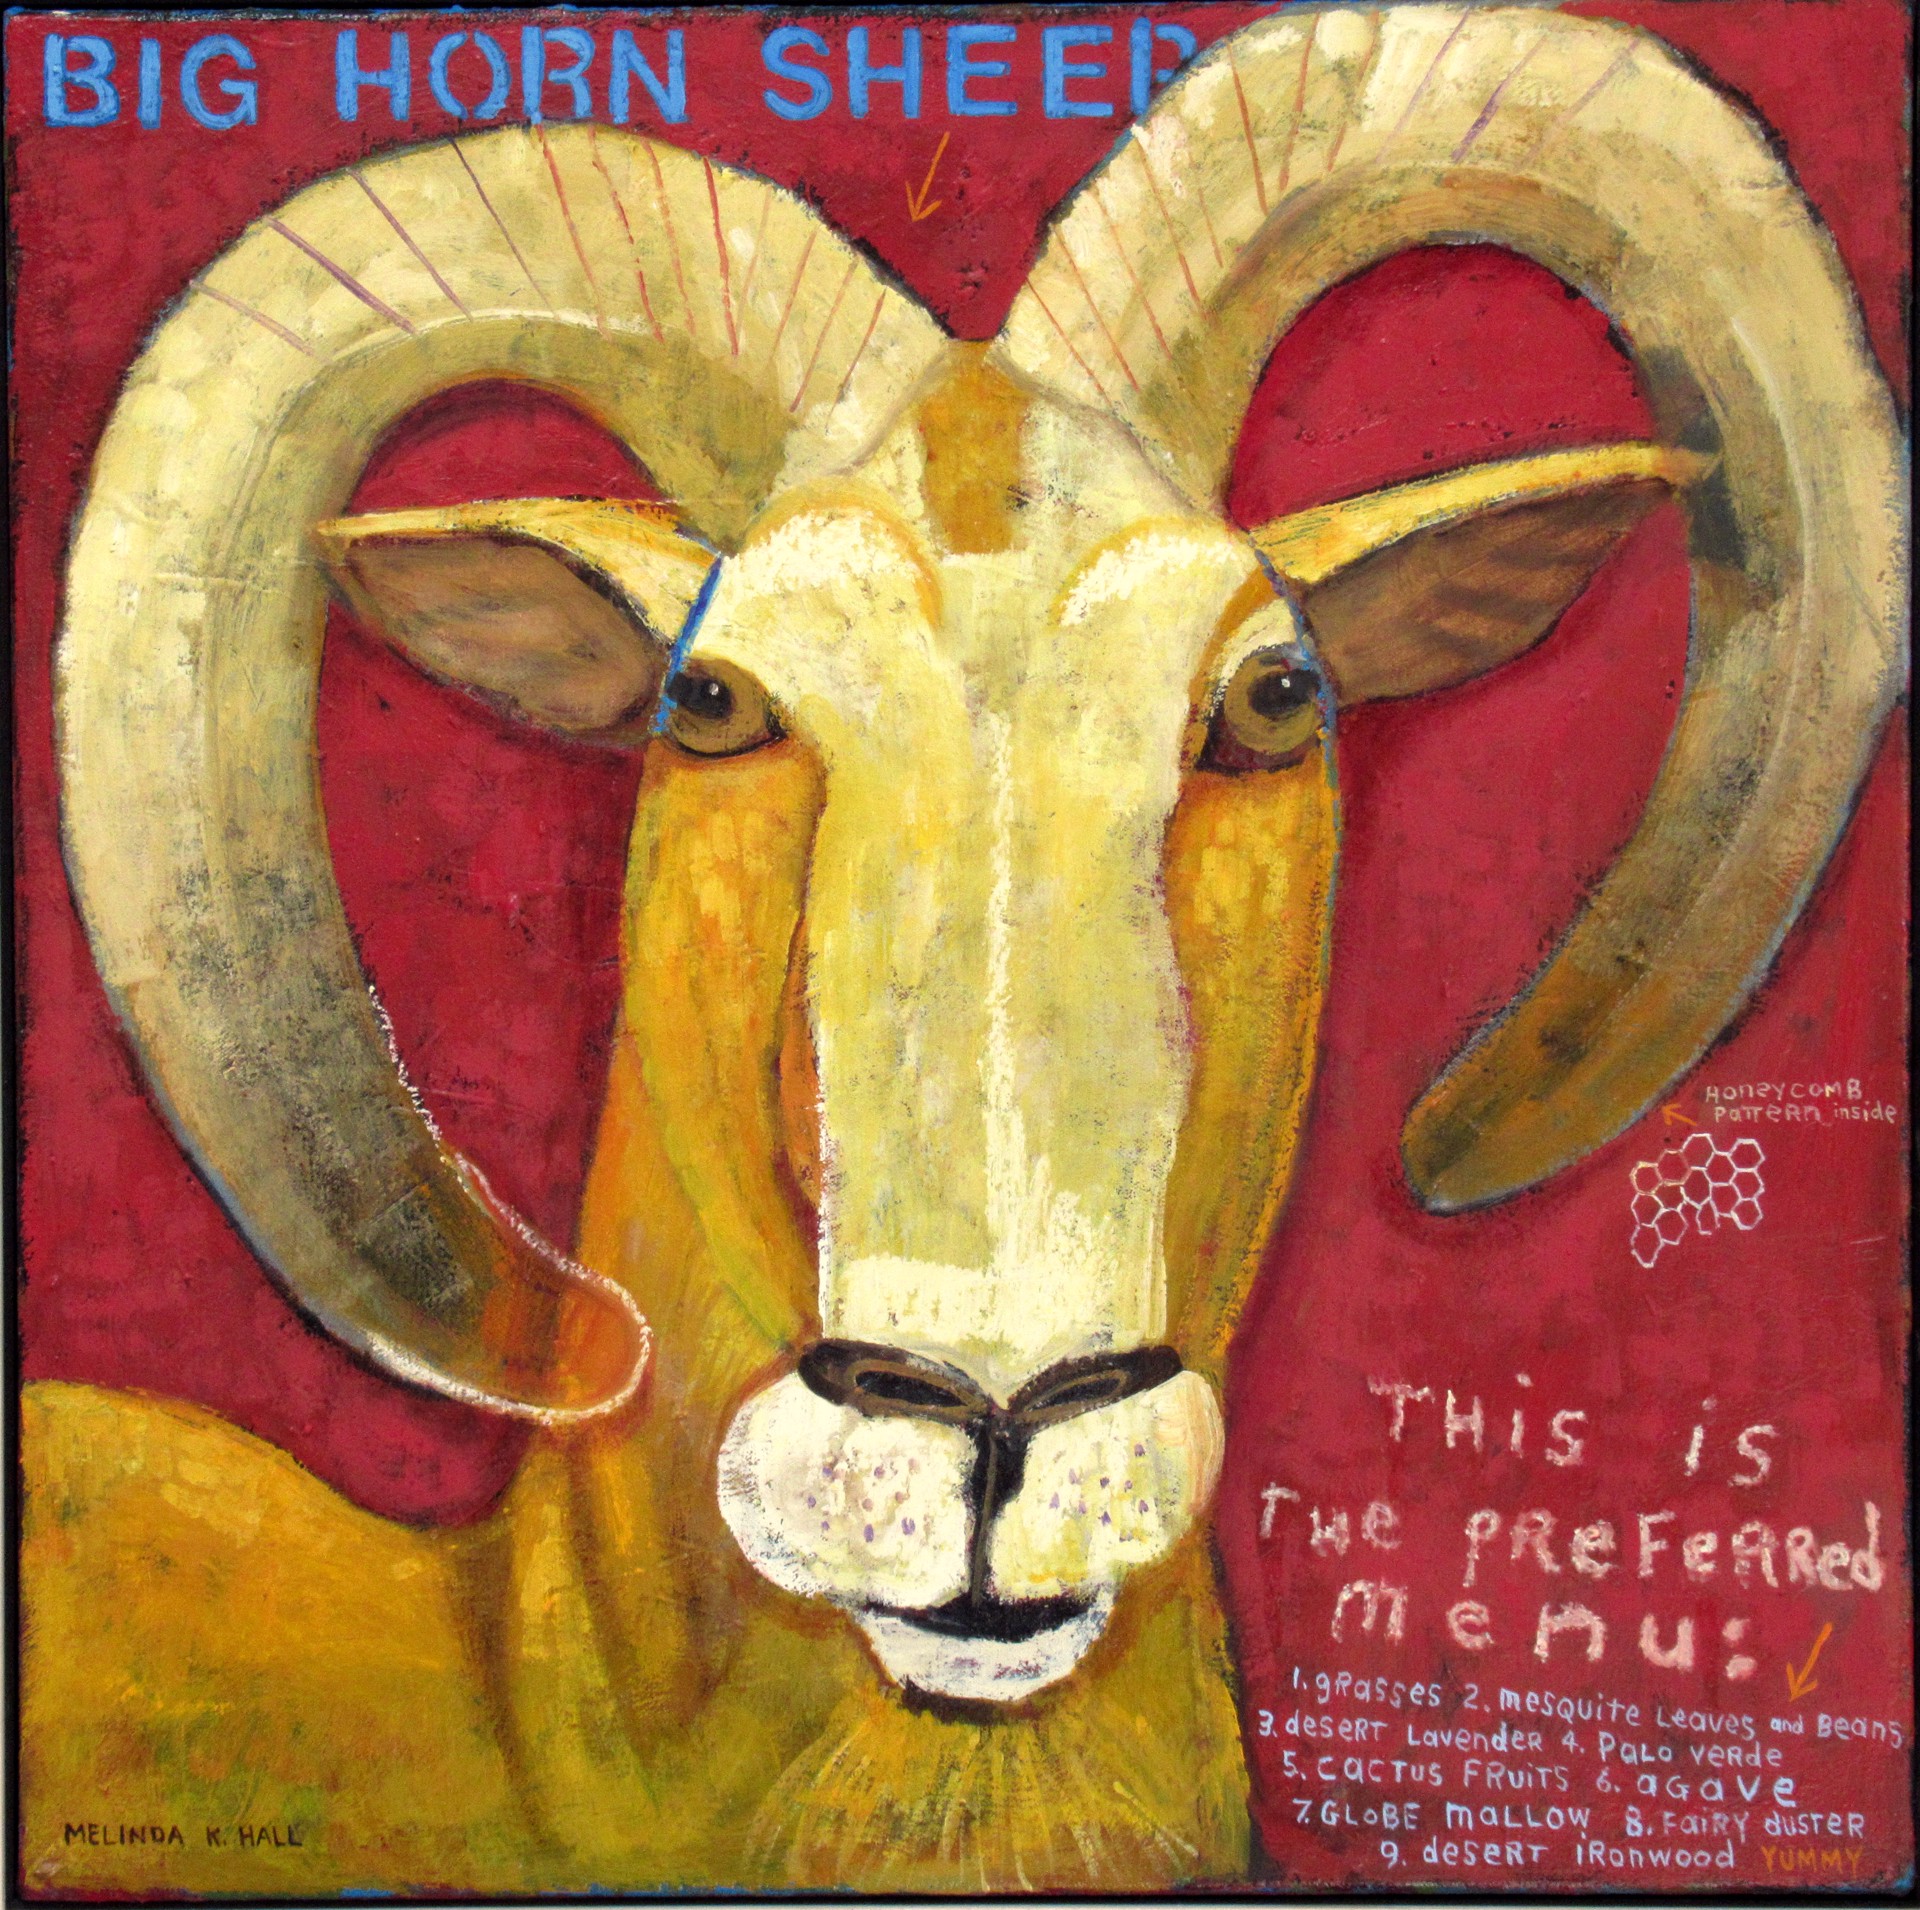 Big Horn Sheep with Preferred Menu by Melinda K. Hall